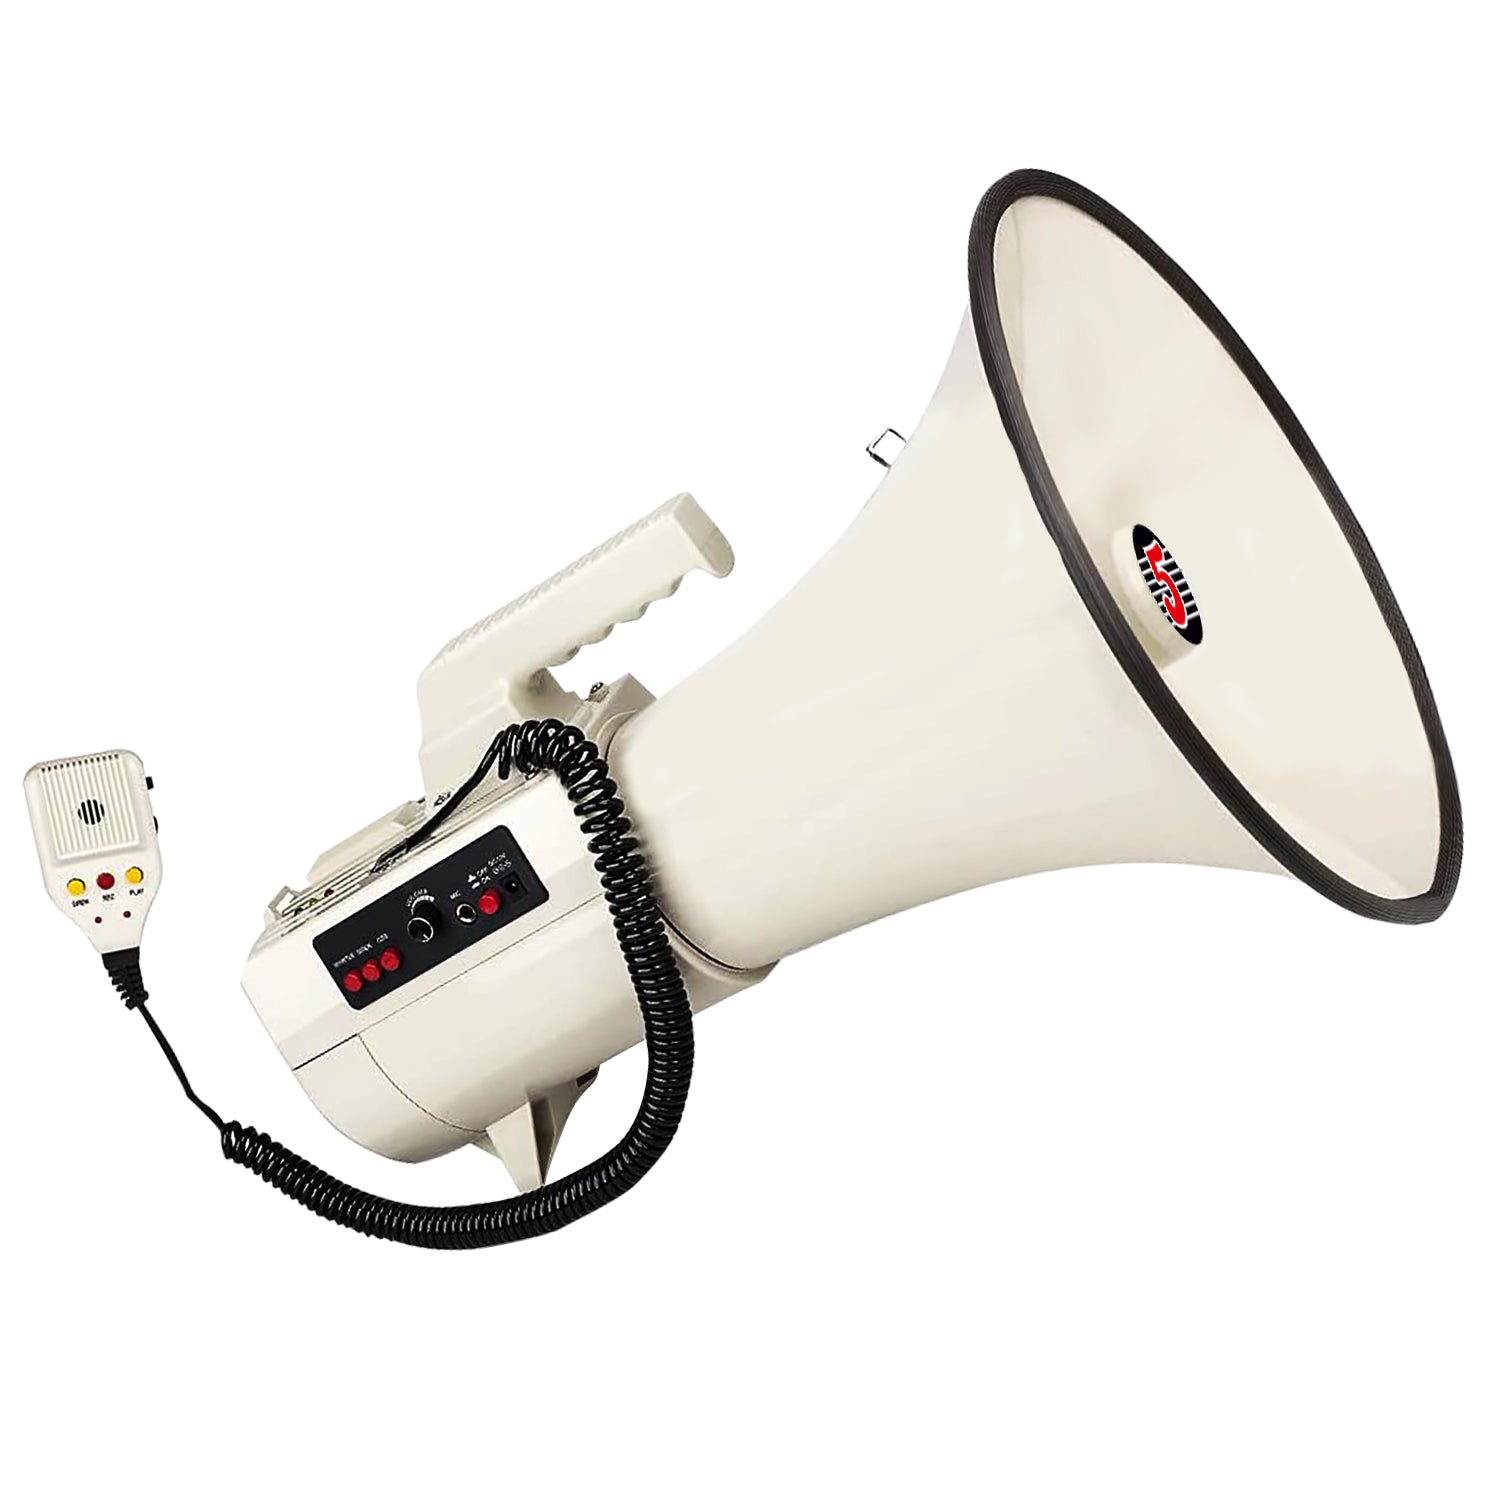 5 CORE 100W Peak Loud Megaphone Siren + Recording + USB Flash Industrial Grade Professional Bullhorn